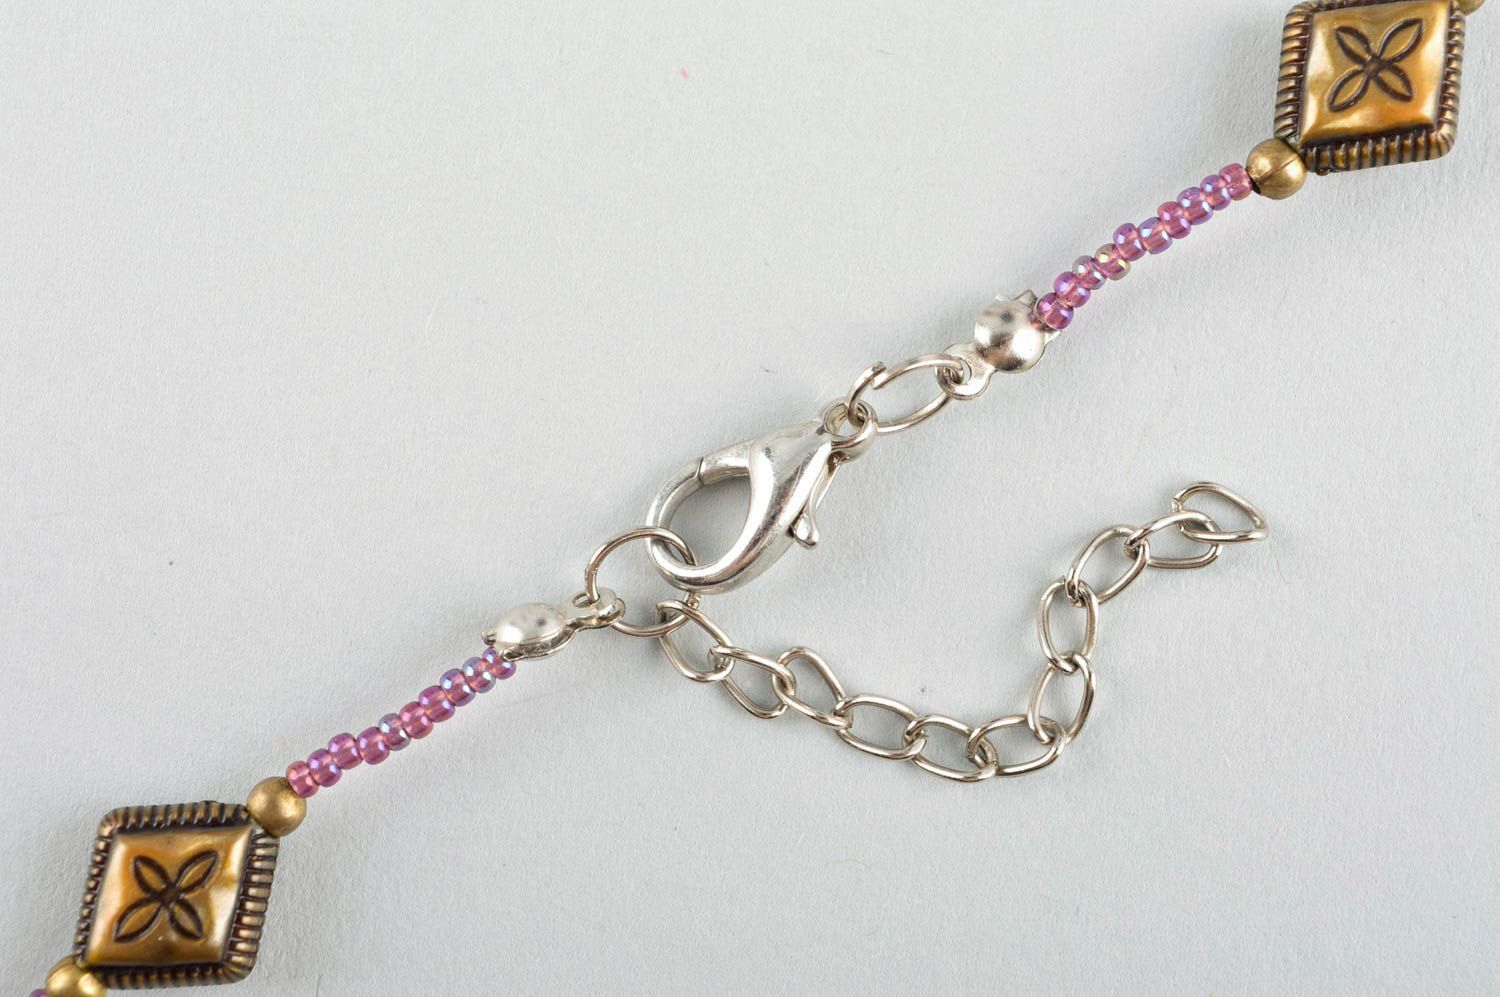 Handmade necklace beaded necklace designer jewelry unusual accessory gift ideas photo 4